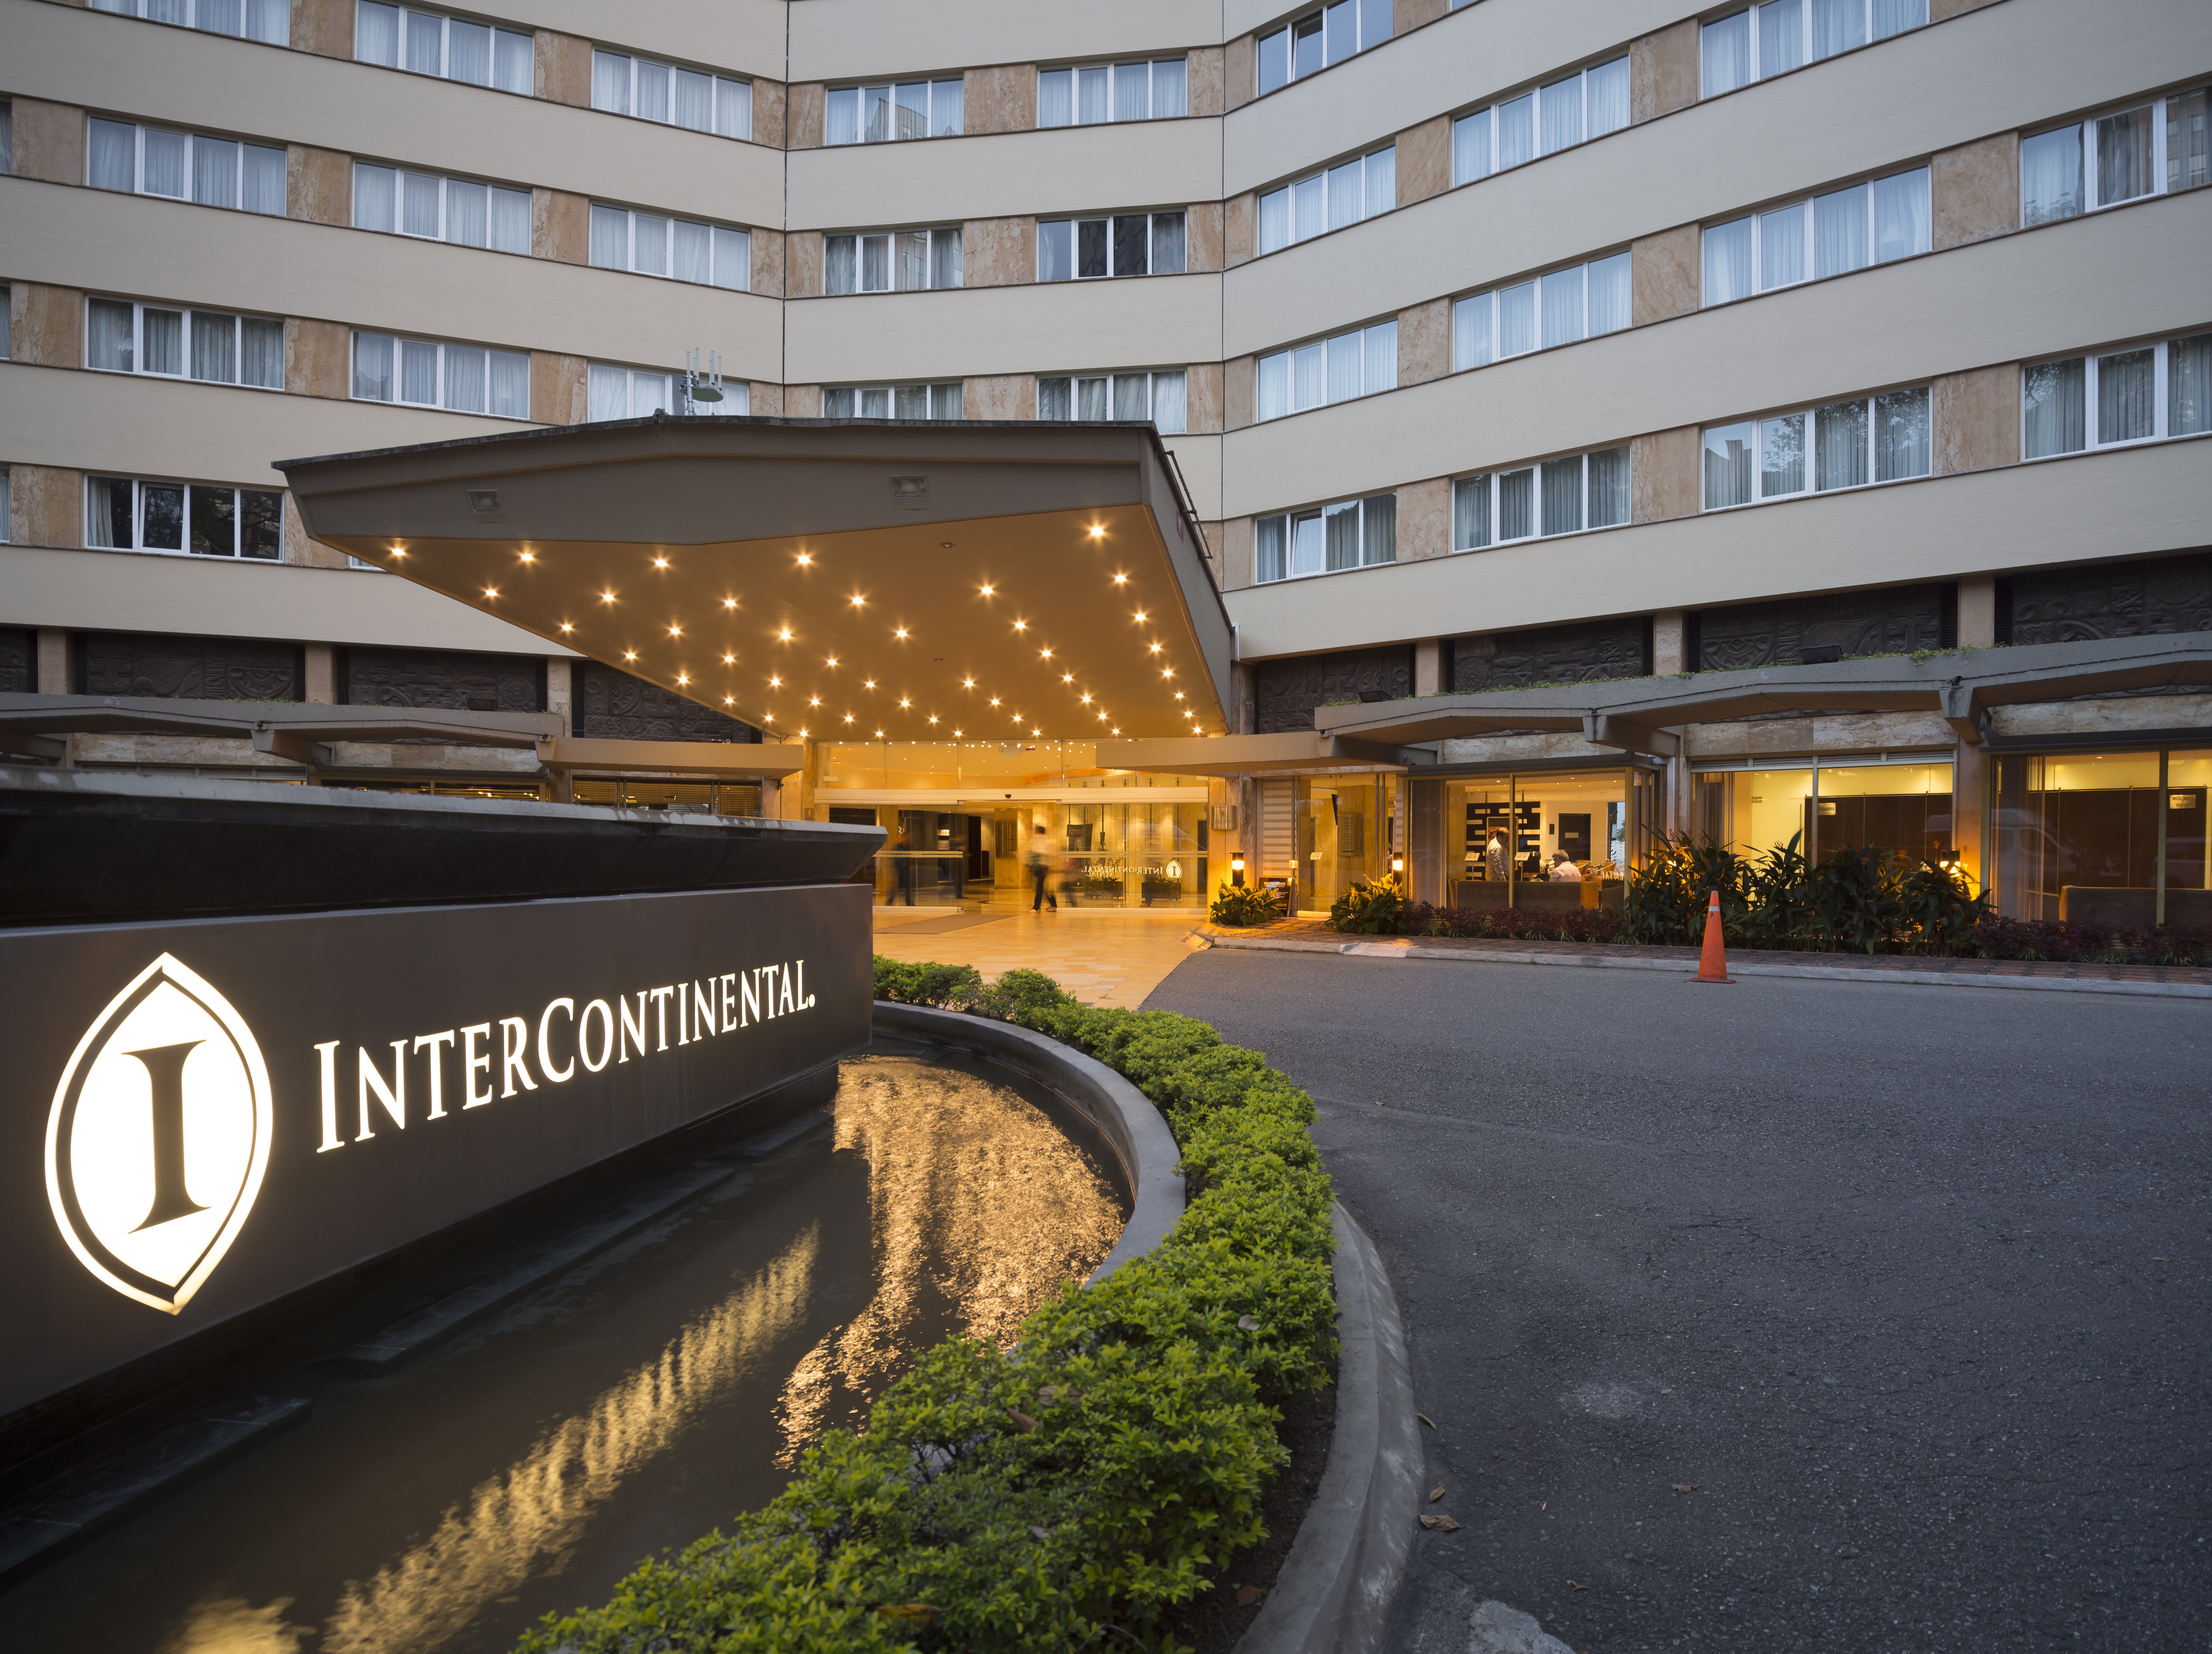 InterContinental Hotel Medellin